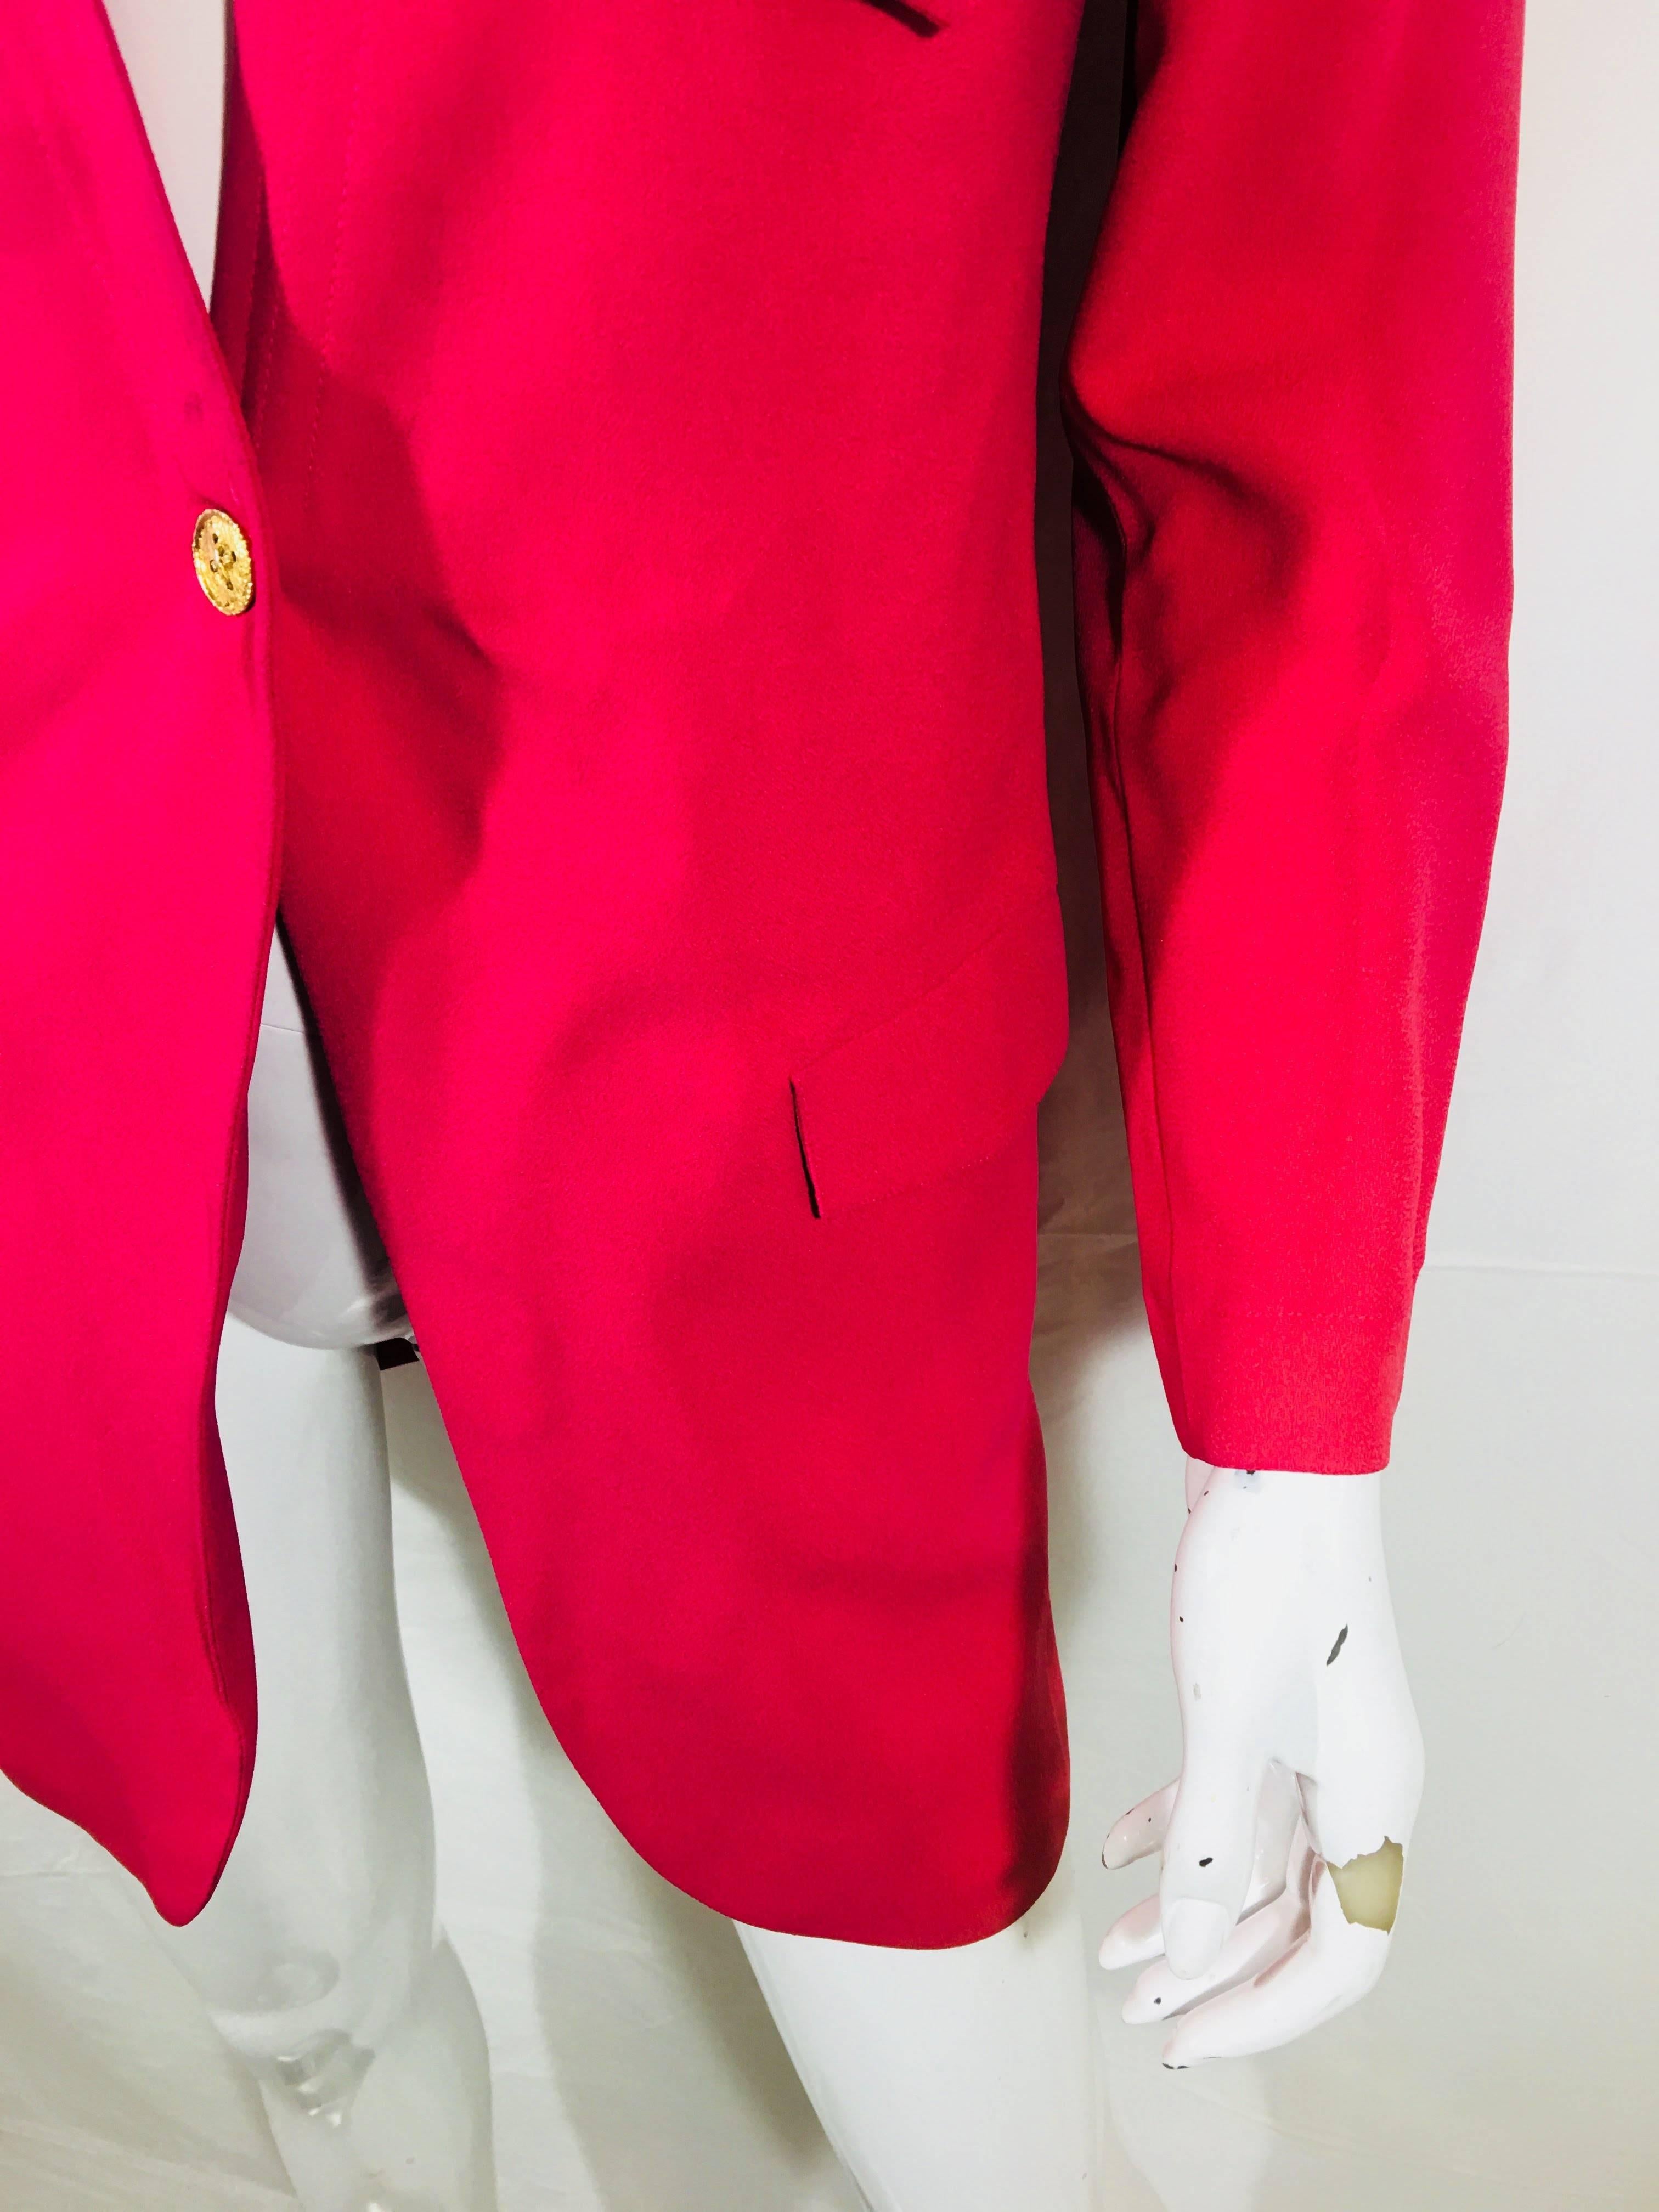 Sonia Rykiel Skirt Suit In Fair Condition In Bridgehampton, NY